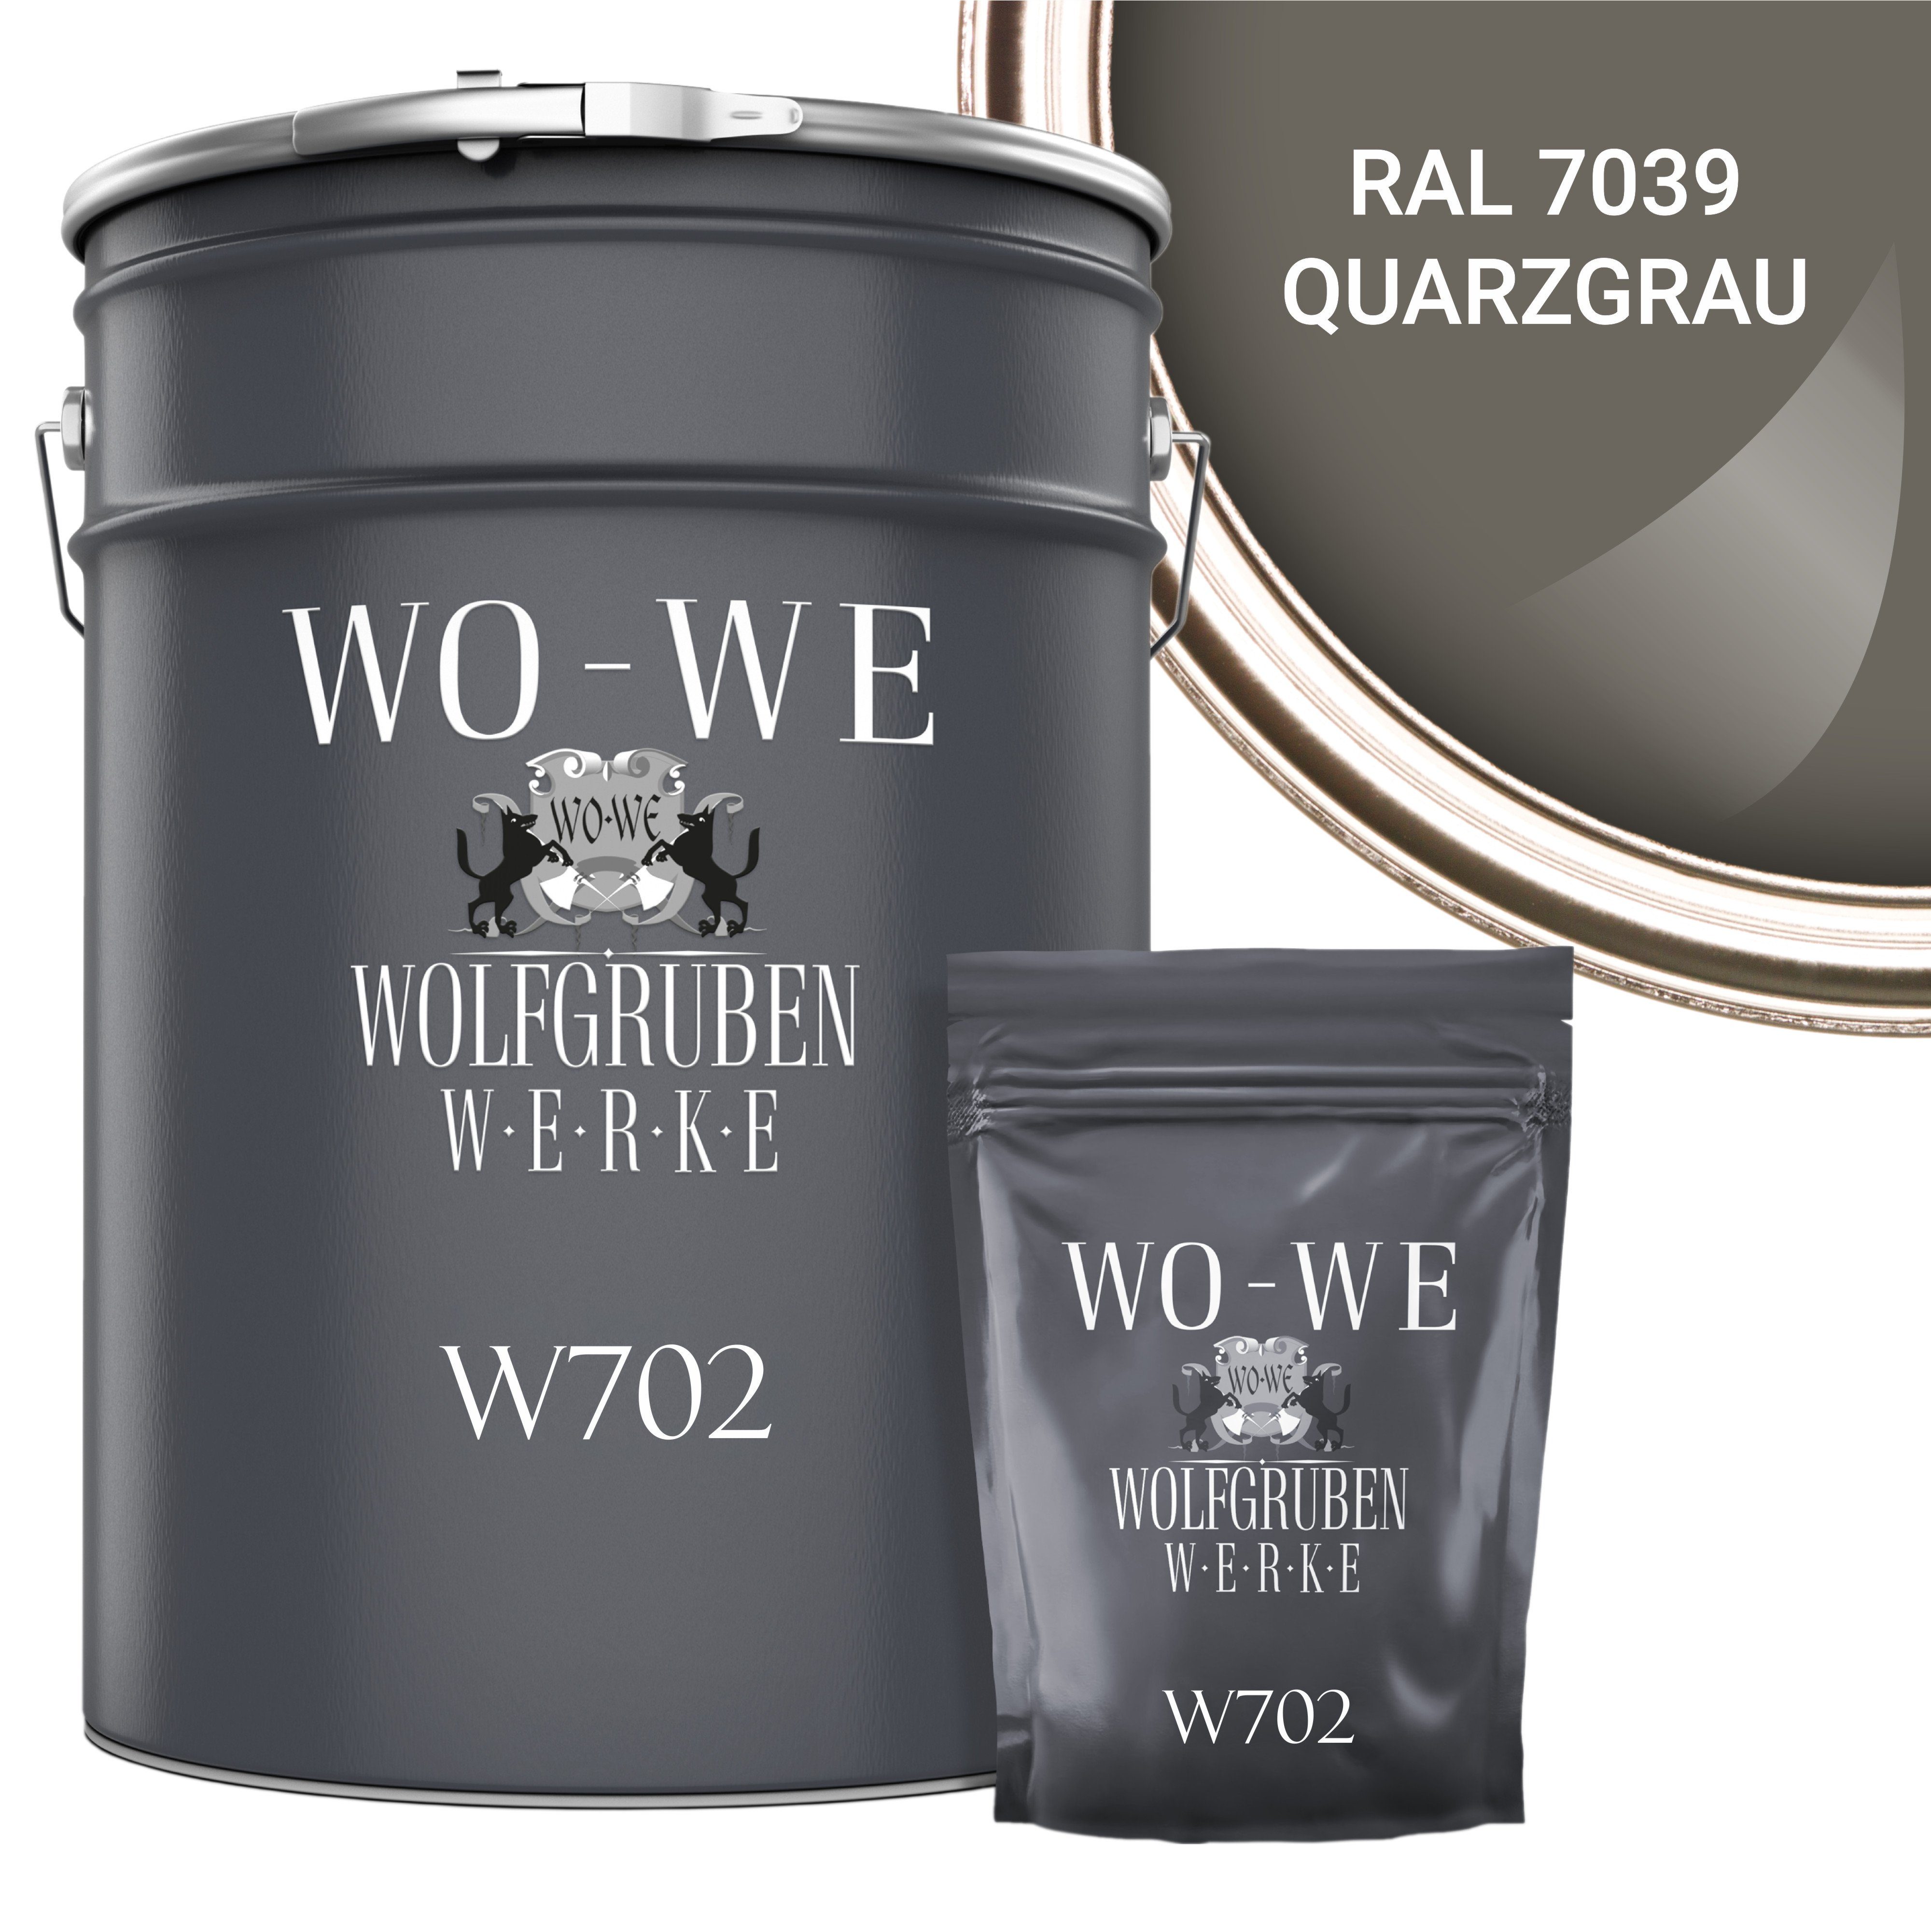 RAL W702, Bodenversiegelung WO-WE Garagenfarbe 2K Bodenbeschichtung Epoxidharz Seidenglänzend, 2,5-20Kg, 7039 Quarzgrau